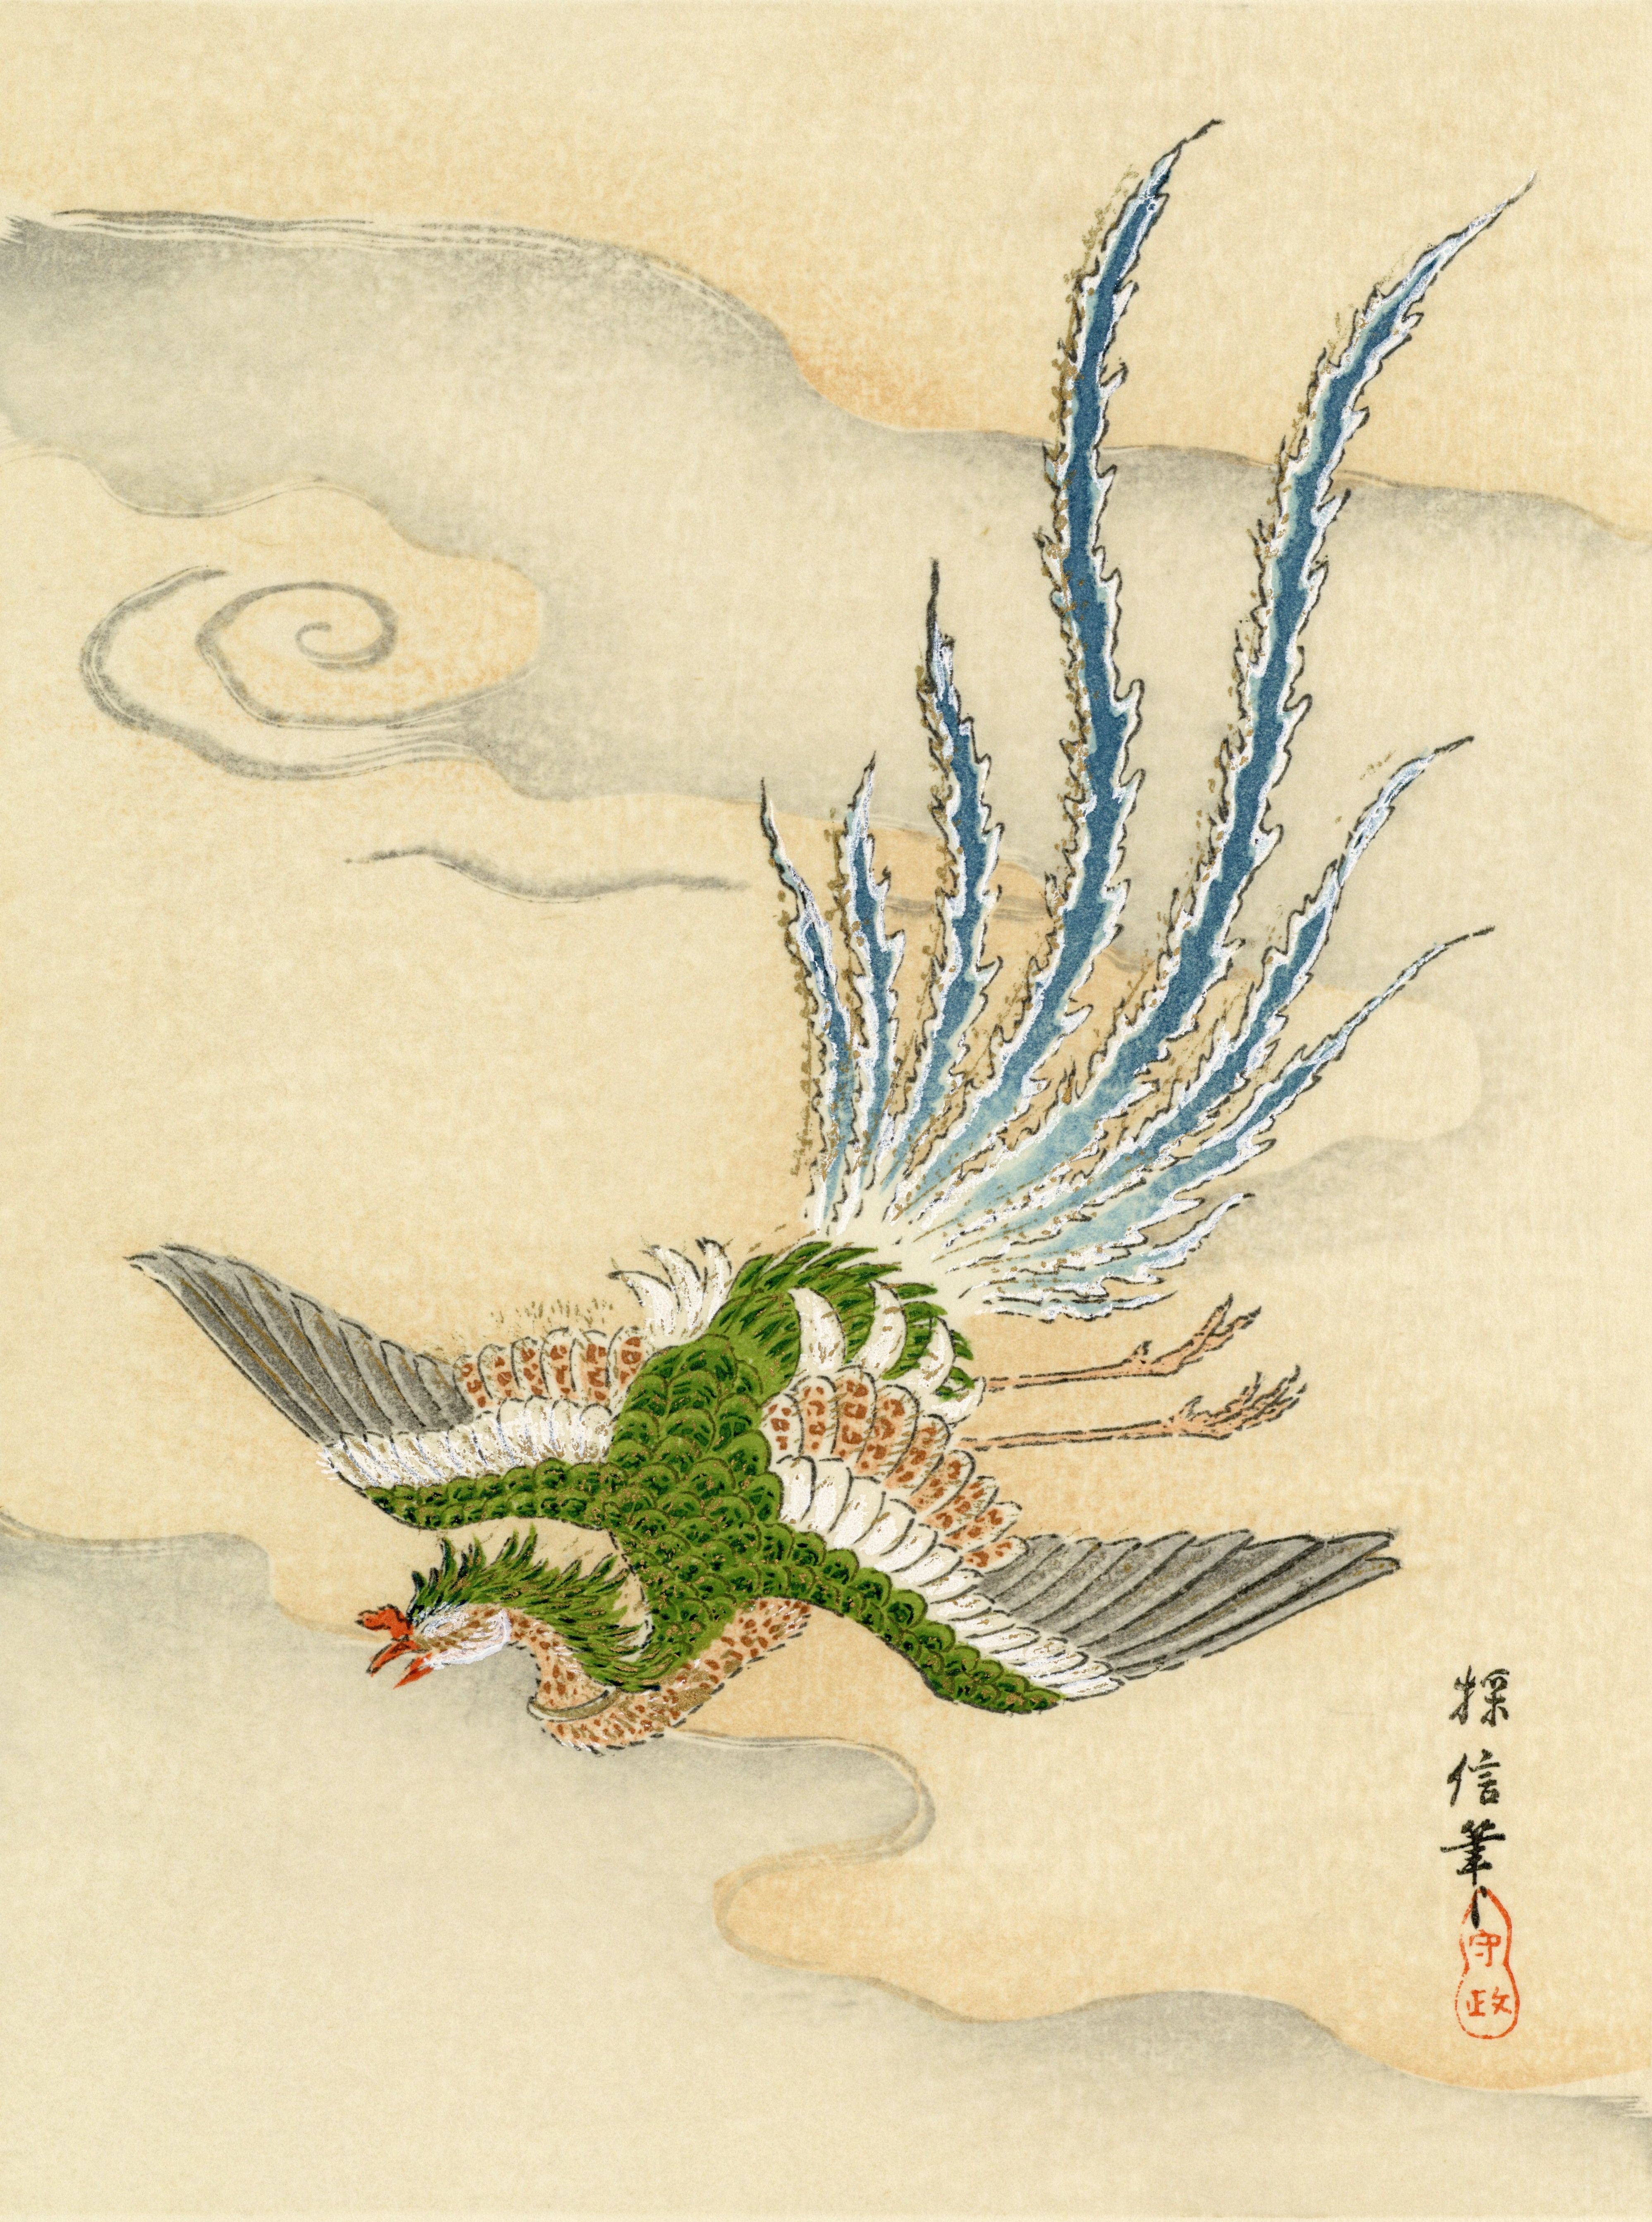 Original woodblock print – After Kano Tanshin (1653-18) – “Hoogaku 